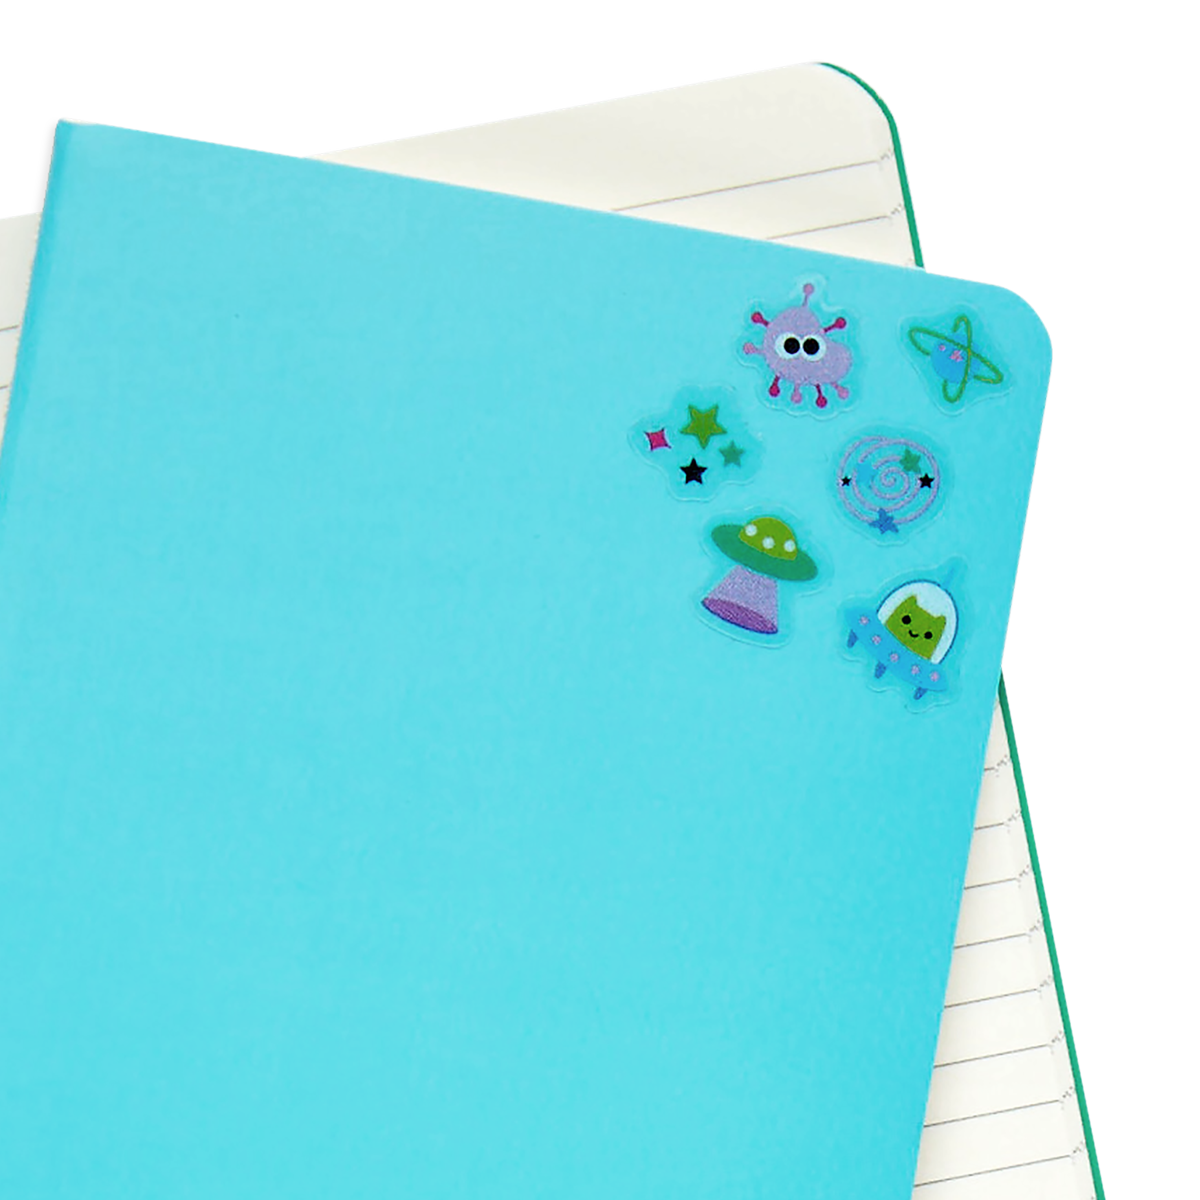 Stickiville Space Buddies stickers on notebook